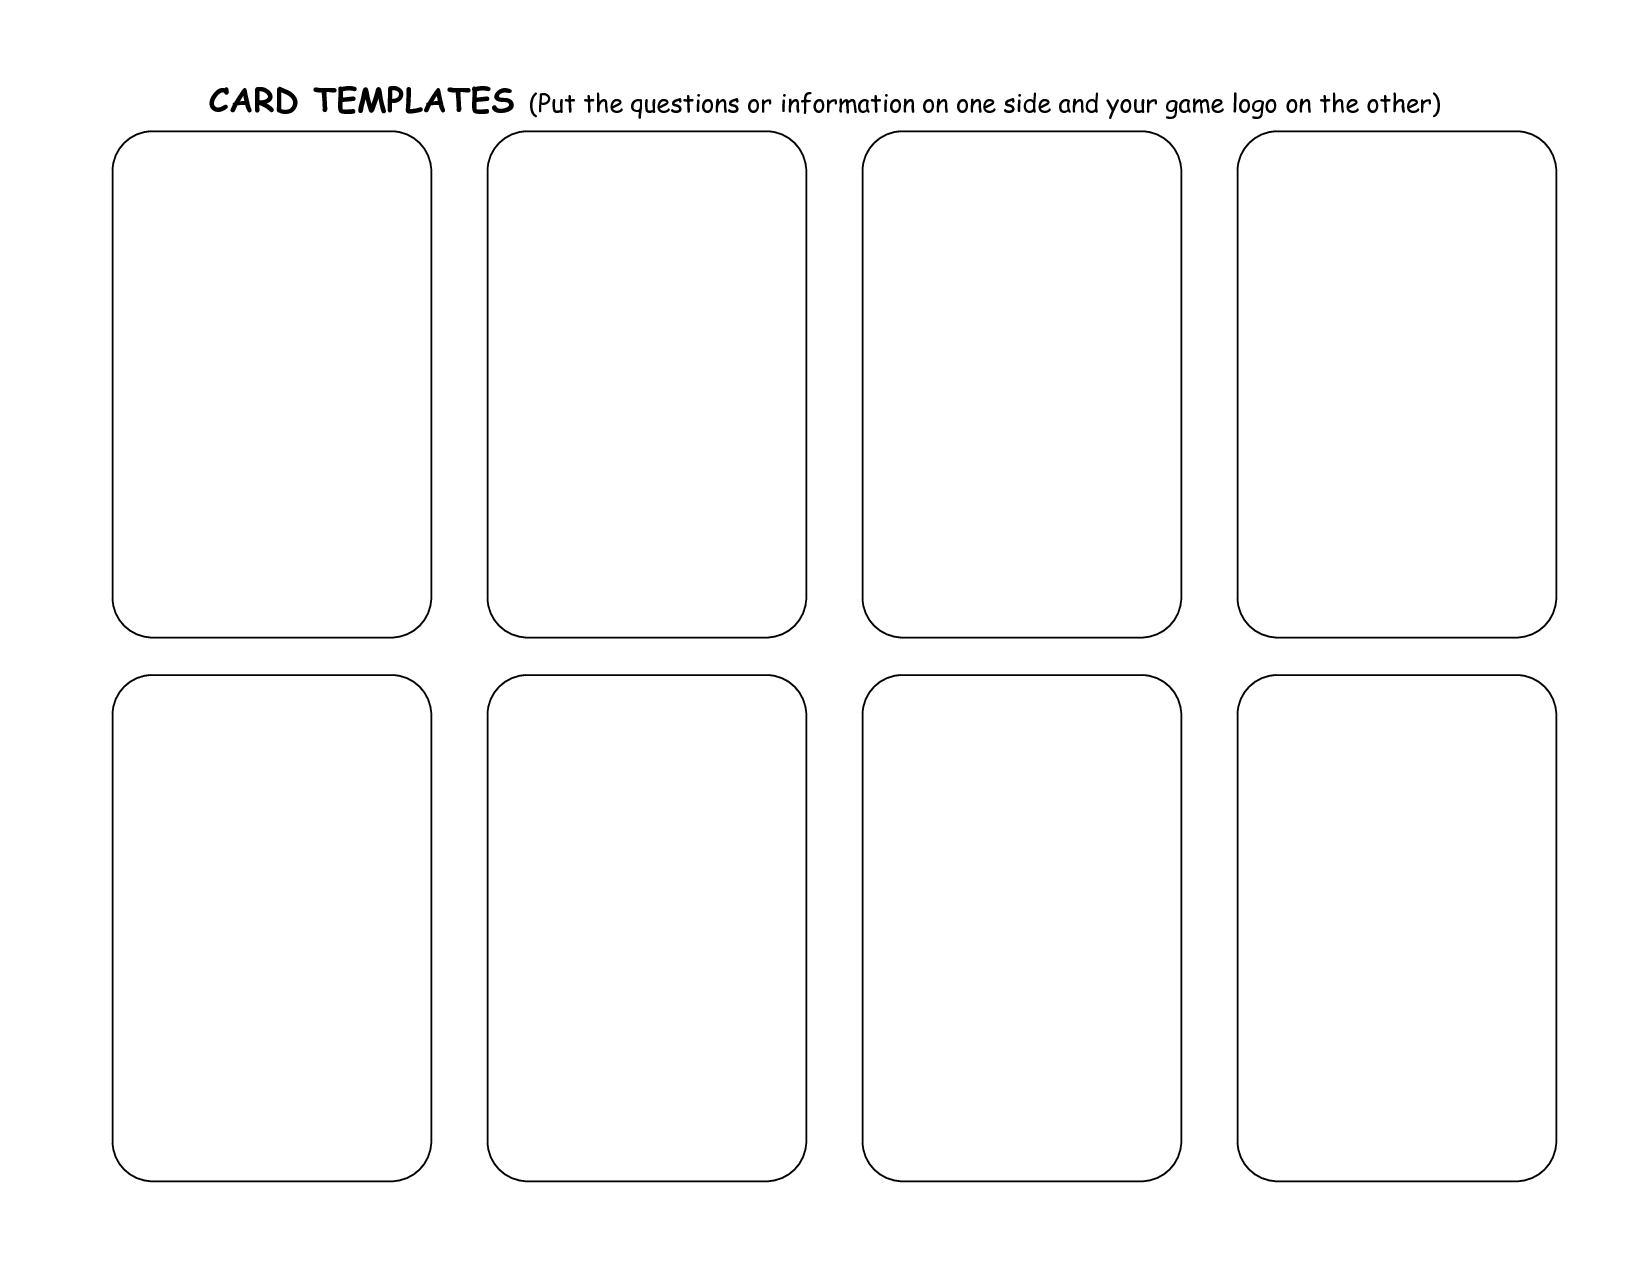 035 Trading Card Maker Free Download Template Ideas Regarding Card Game Template Maker